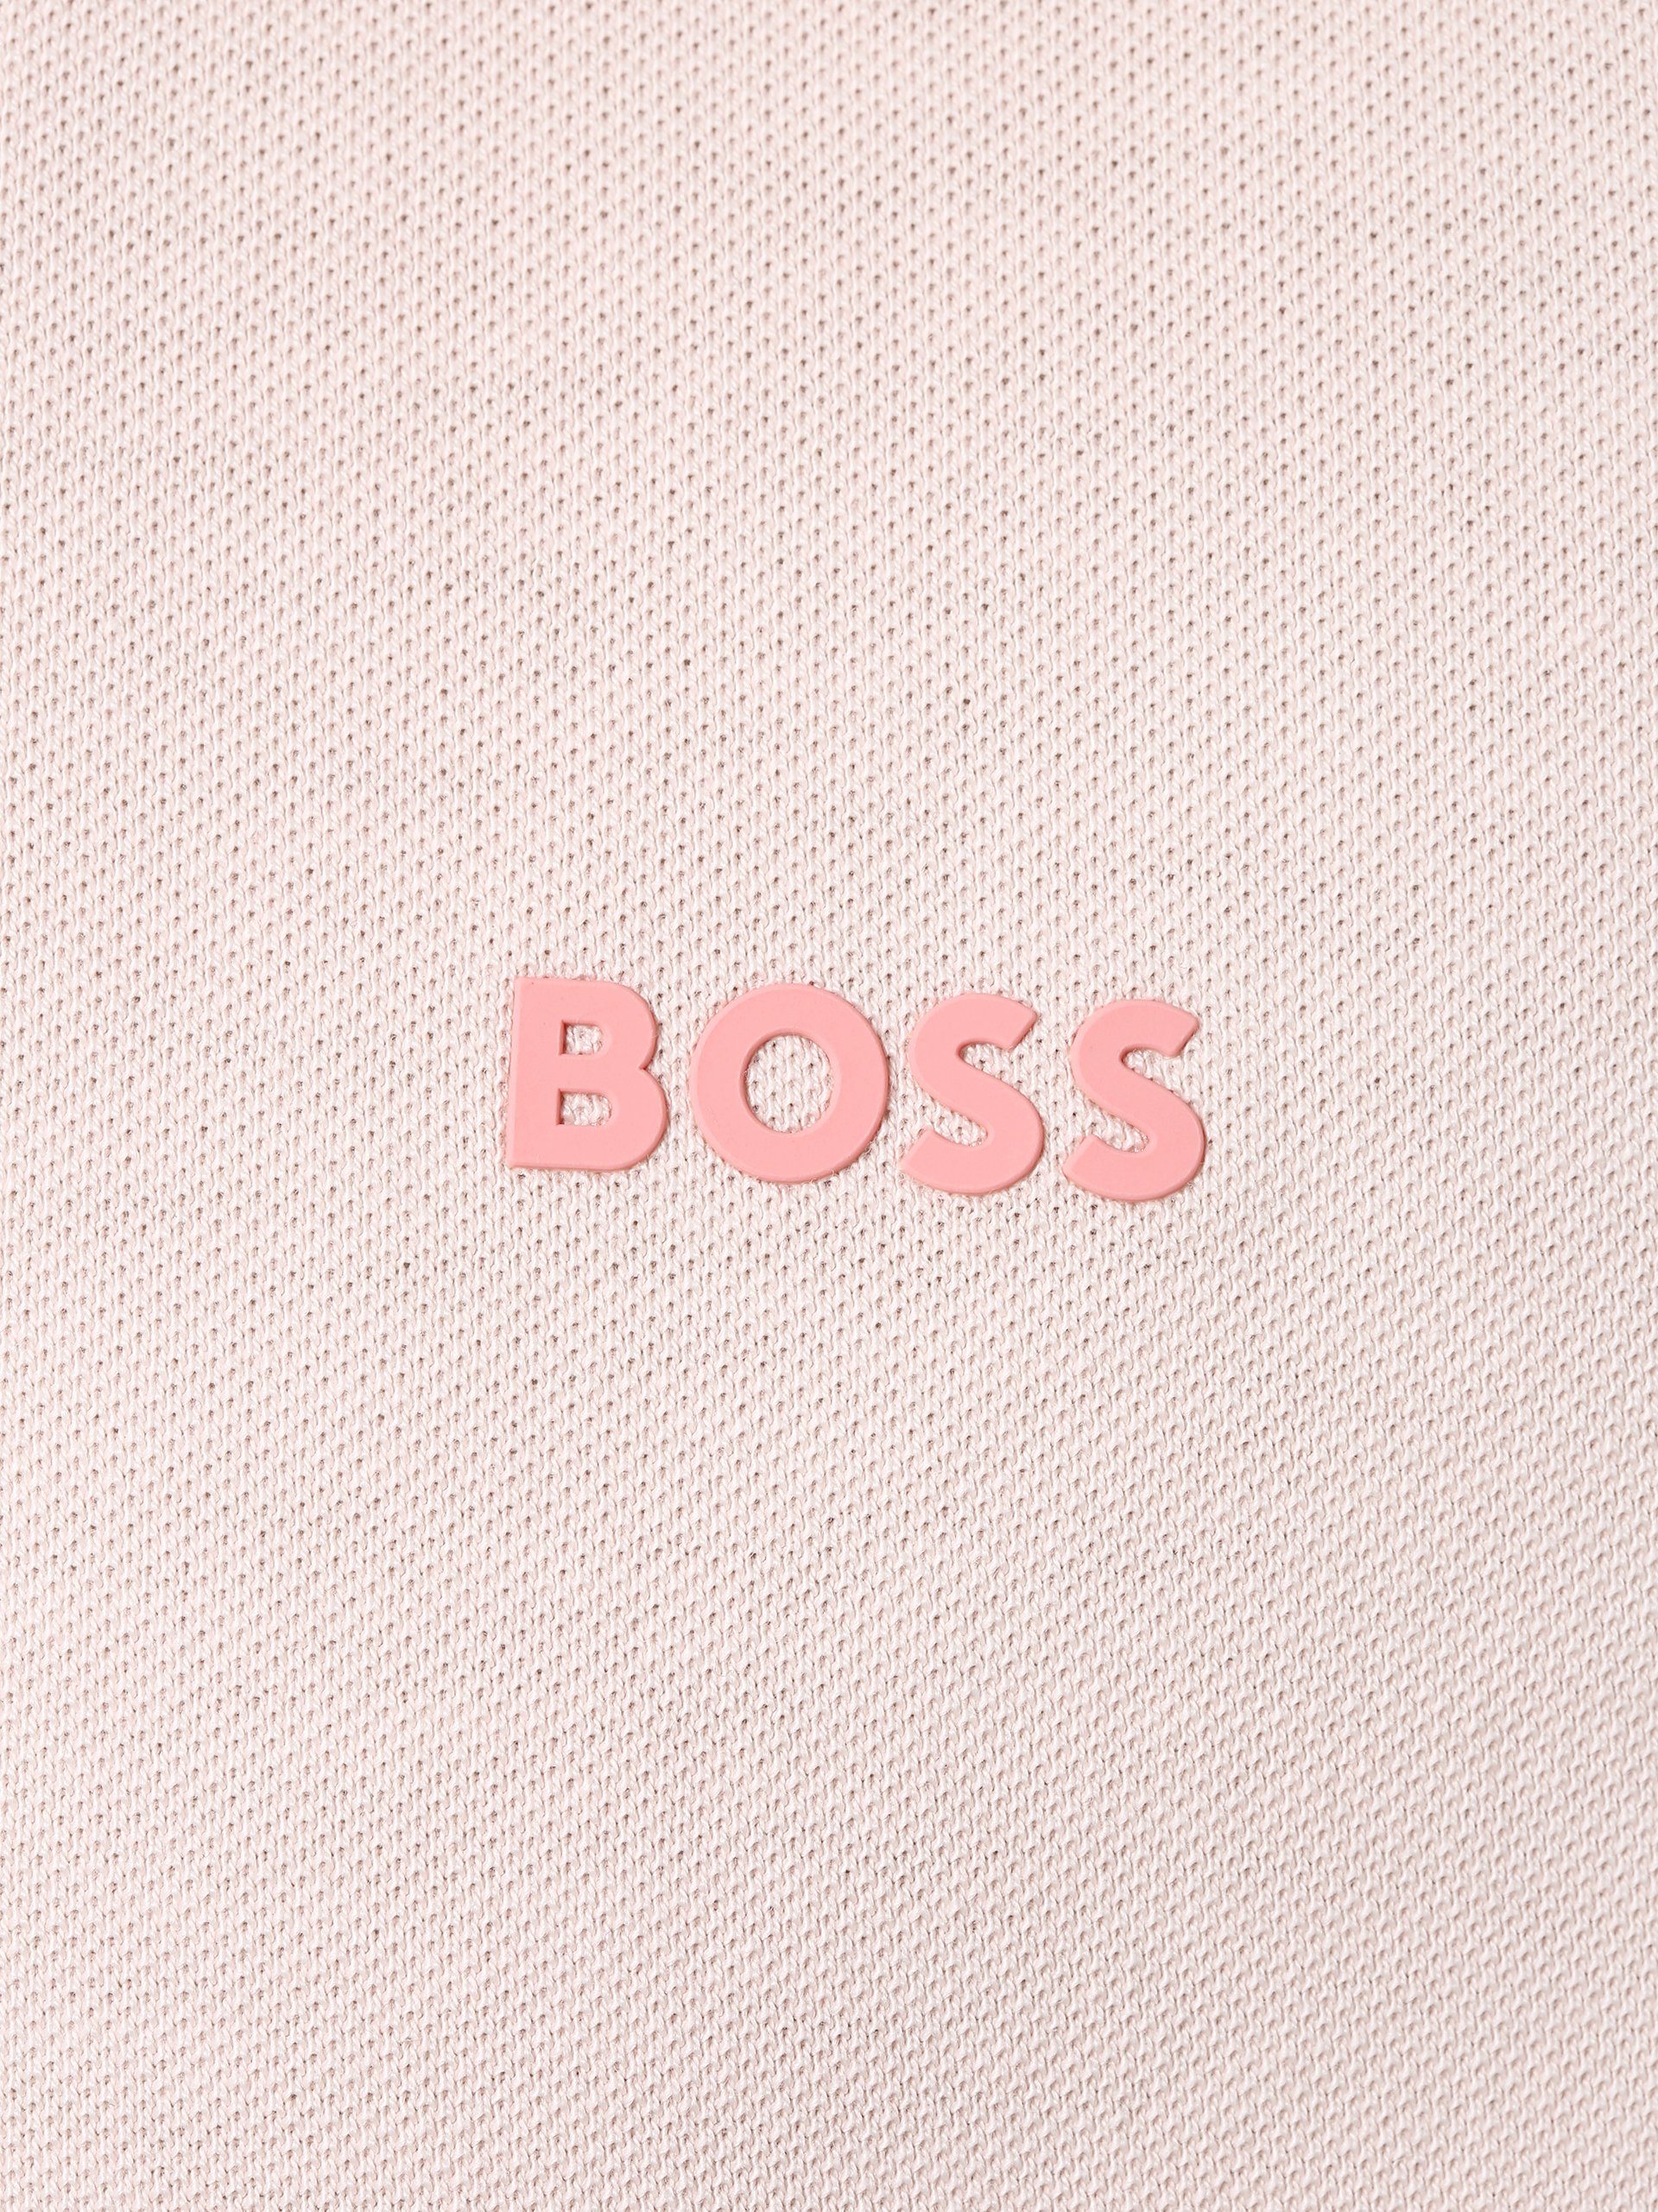 BOSS ORANGE Prime rosa Poloshirt